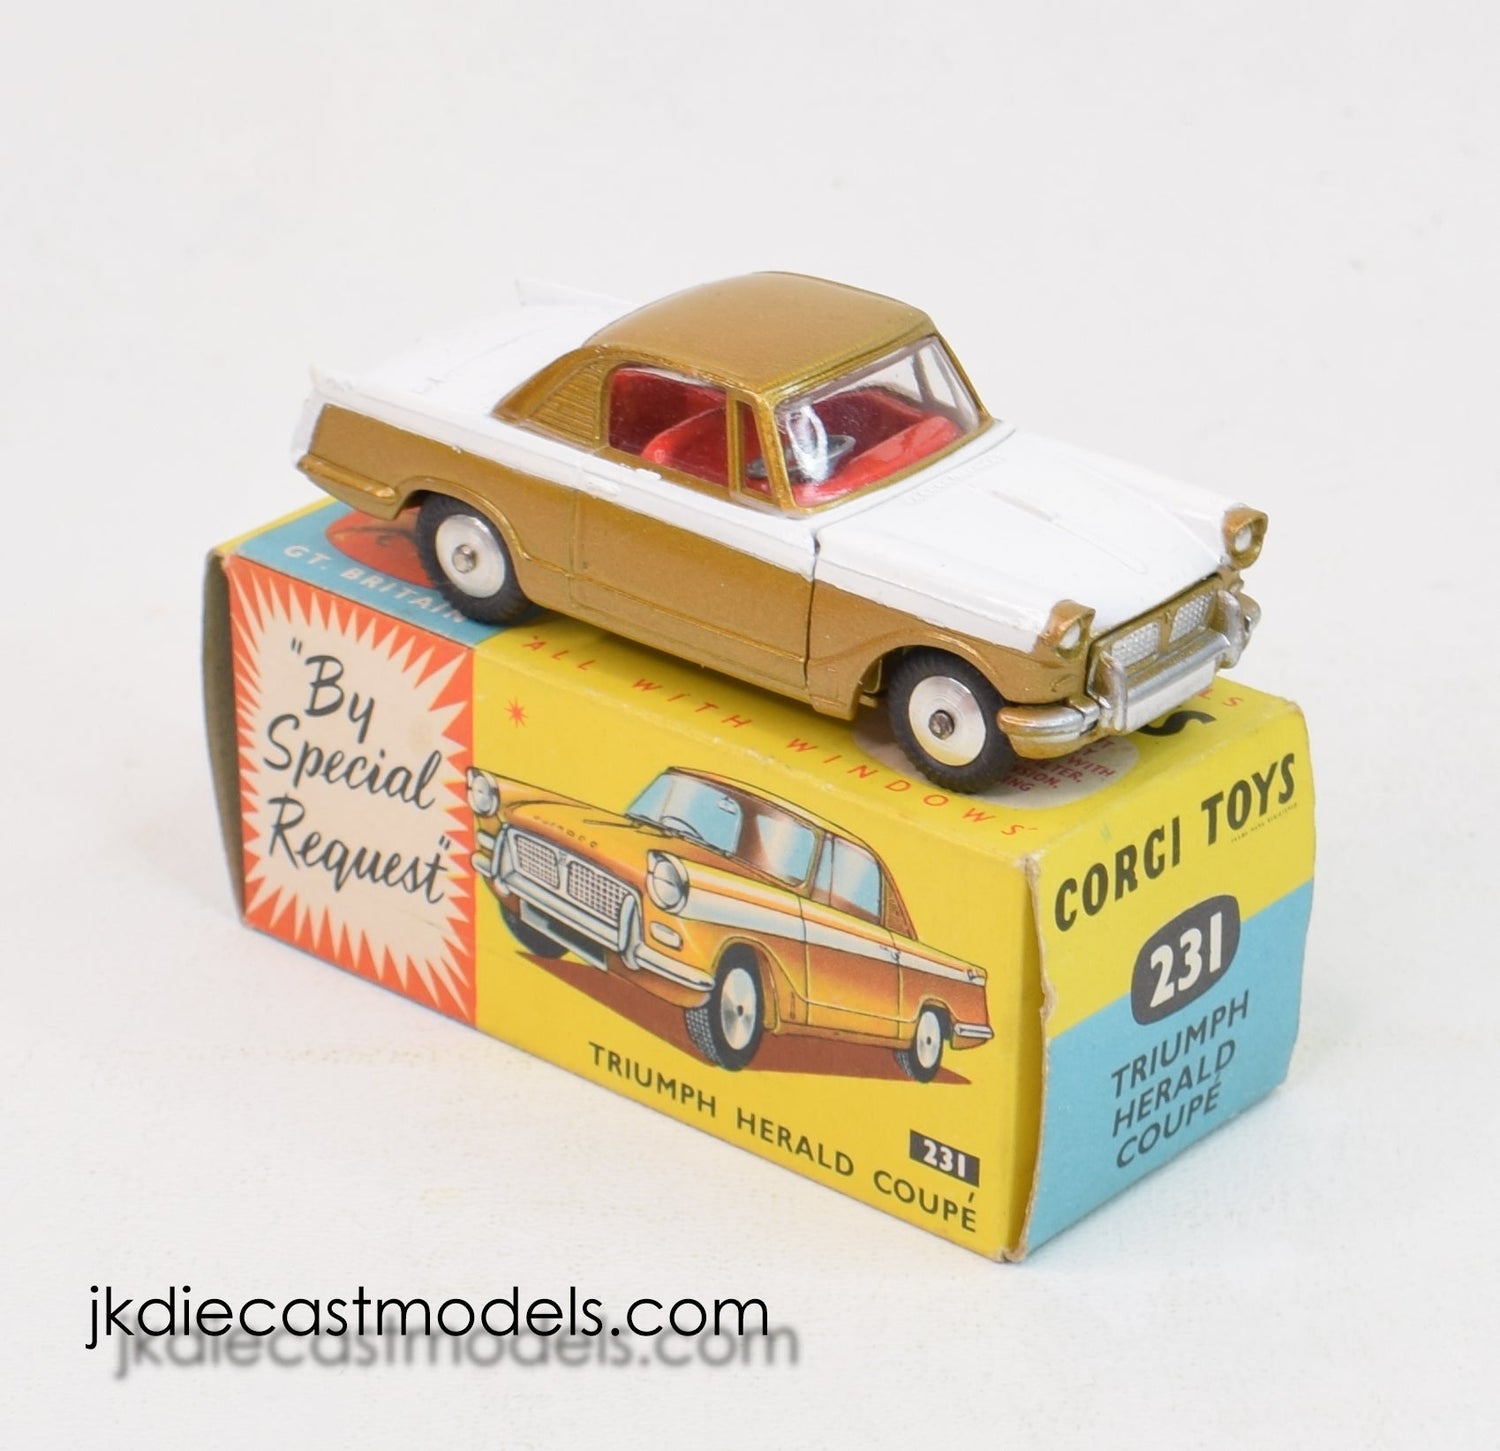 Corgi toys 231 Triumph Herald Virtually Mint/Boxed